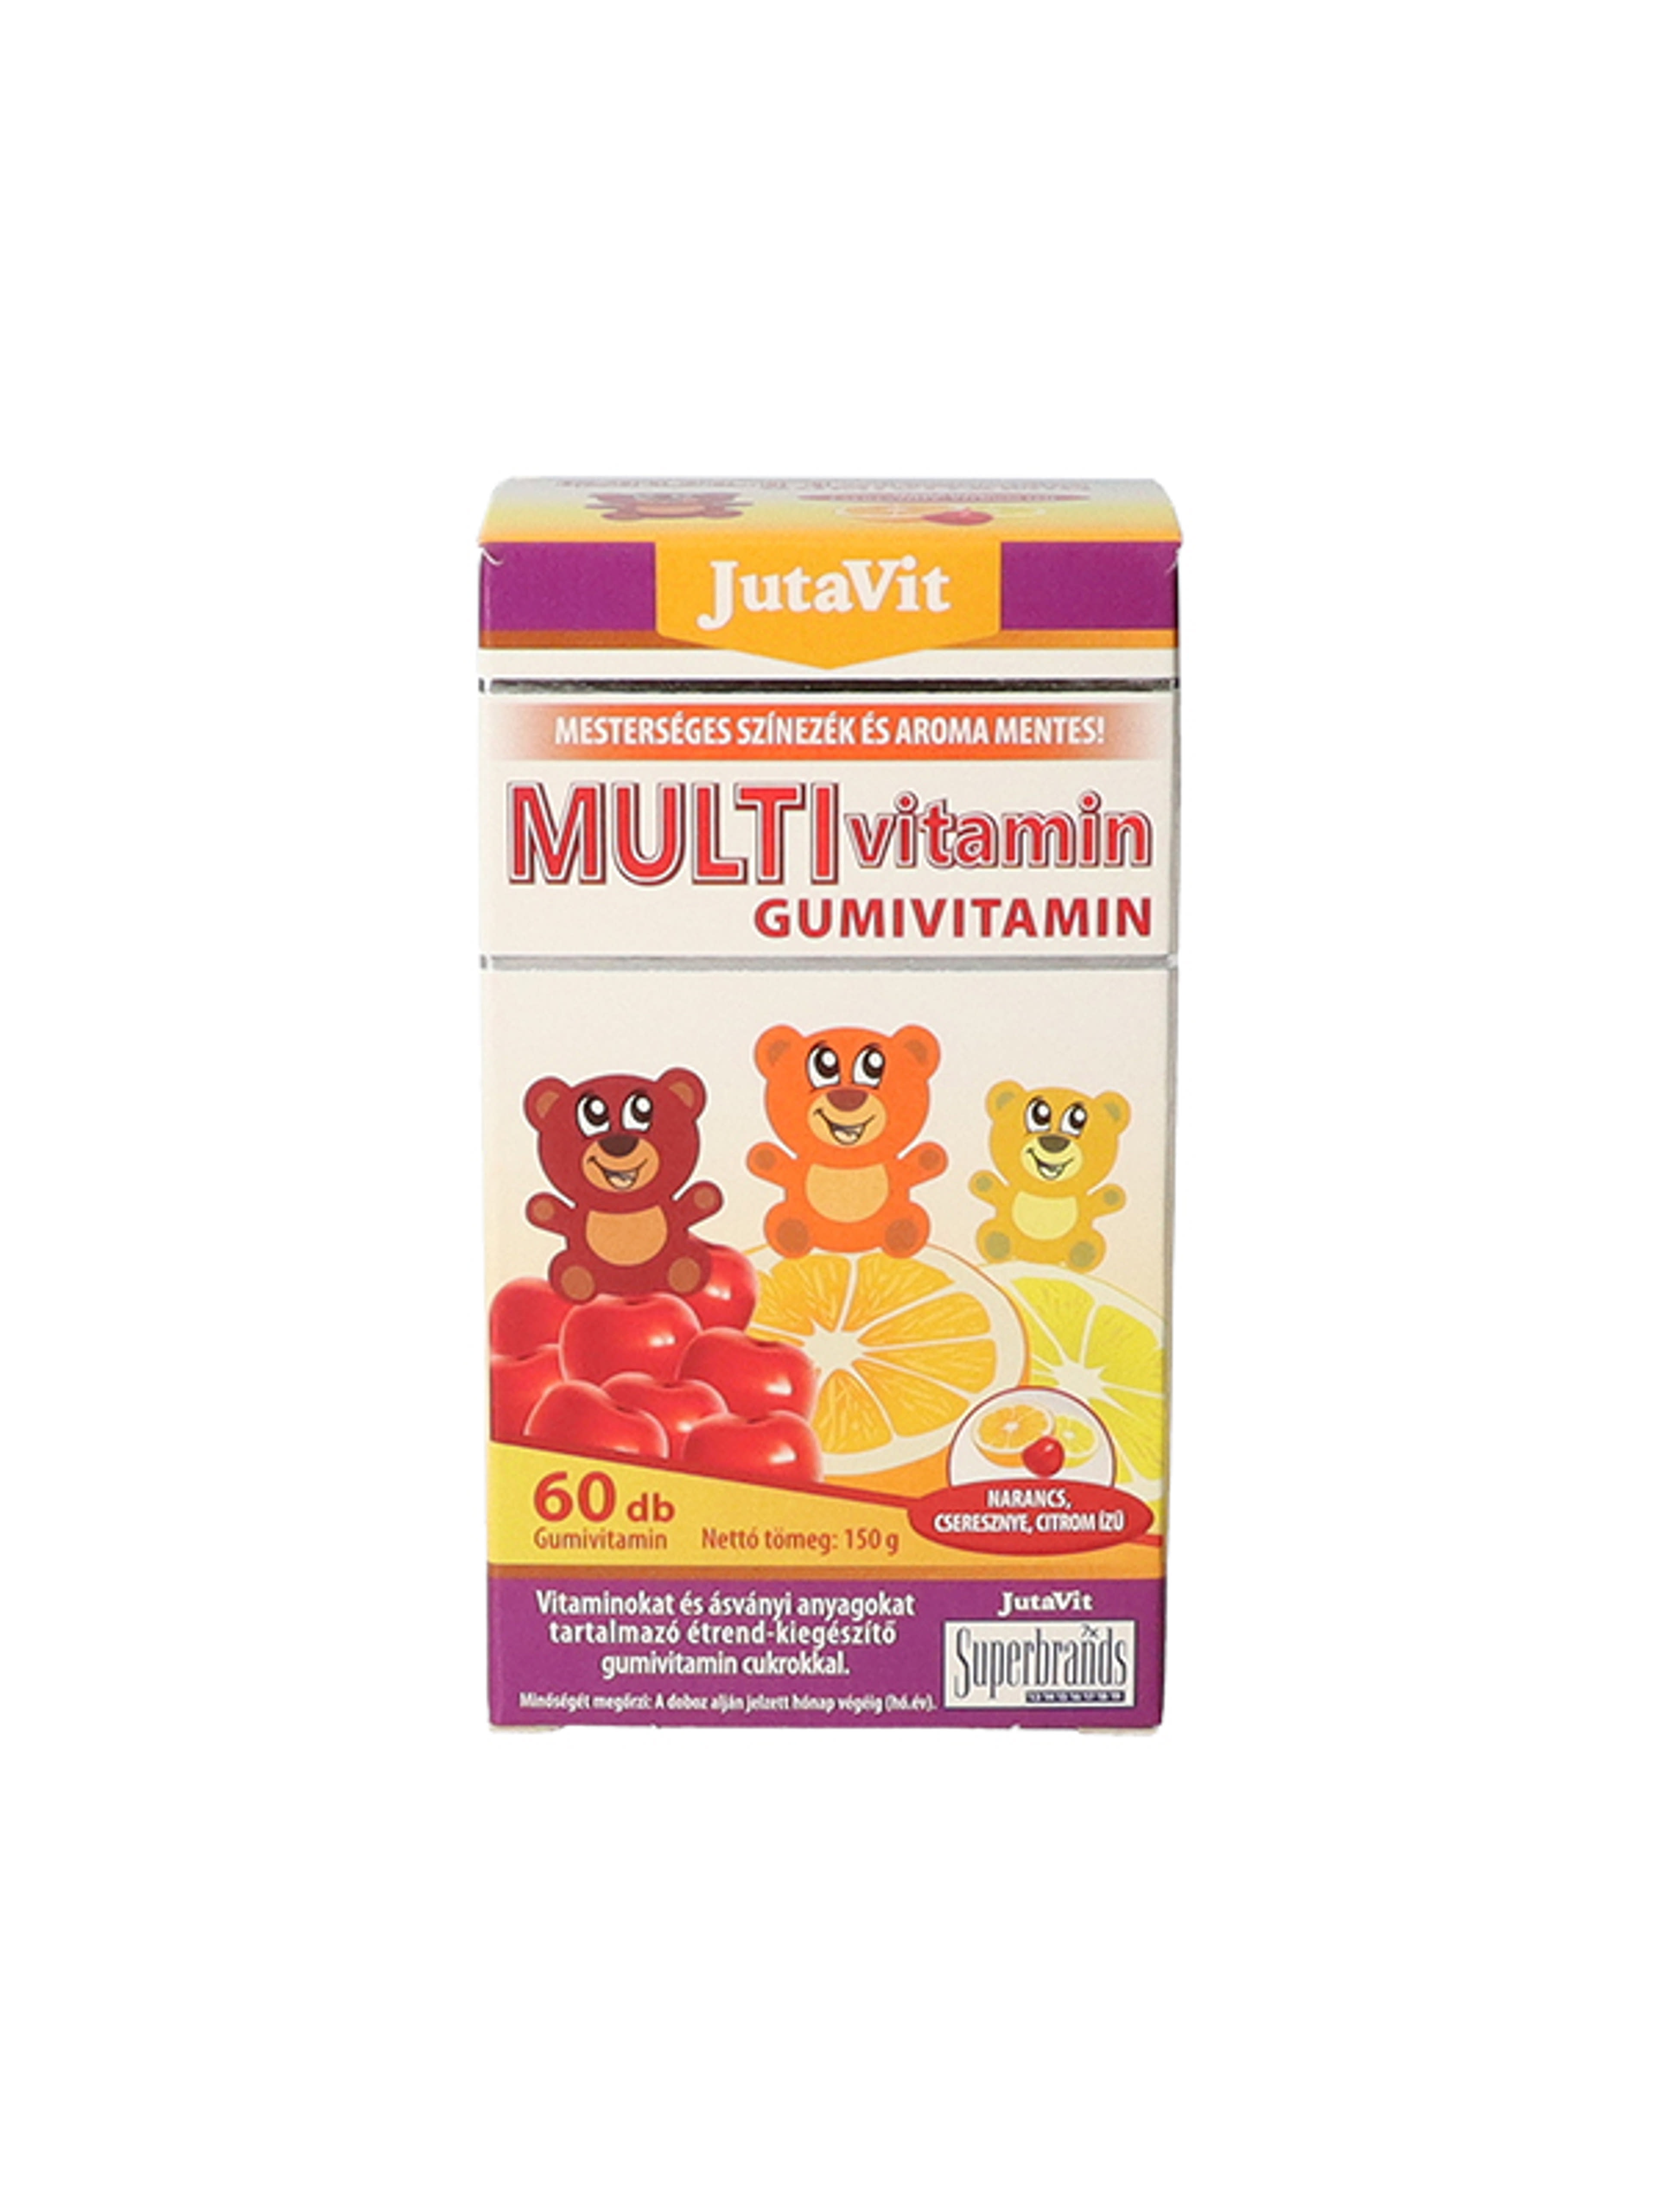 JutaVit Multivitamin Gyümölcs Ízű Gumivitamin - 60 db-1